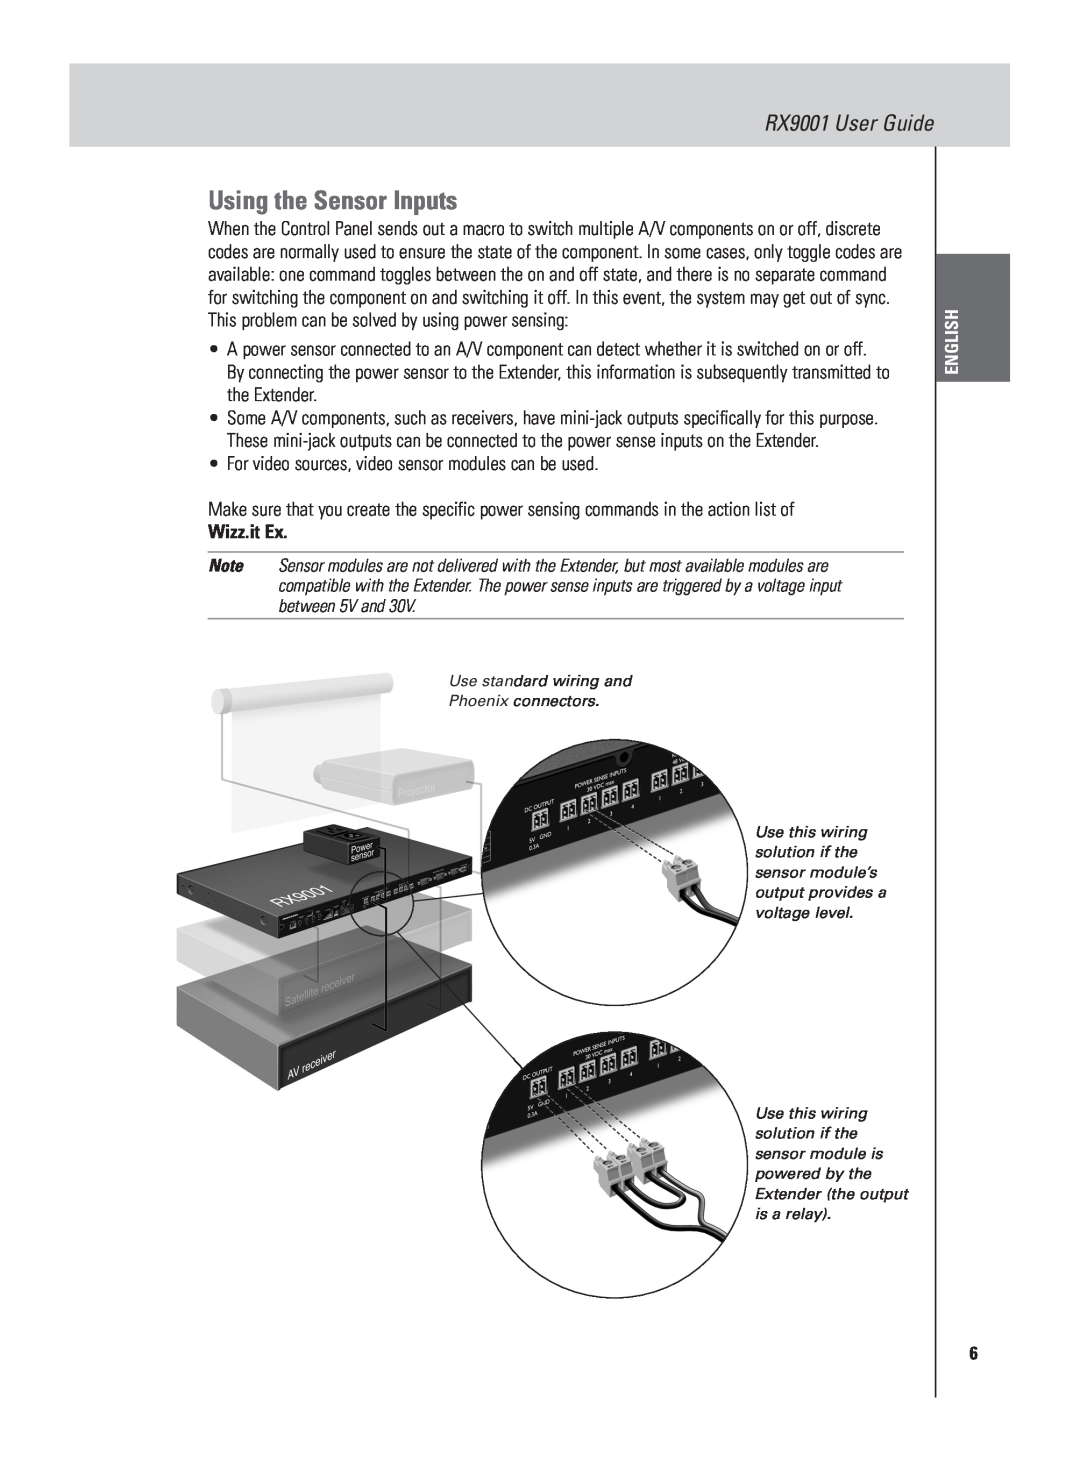 Marantz manual Using the Sensor Inputs, Wizz.it Ex, RX9001 User Guide, English 